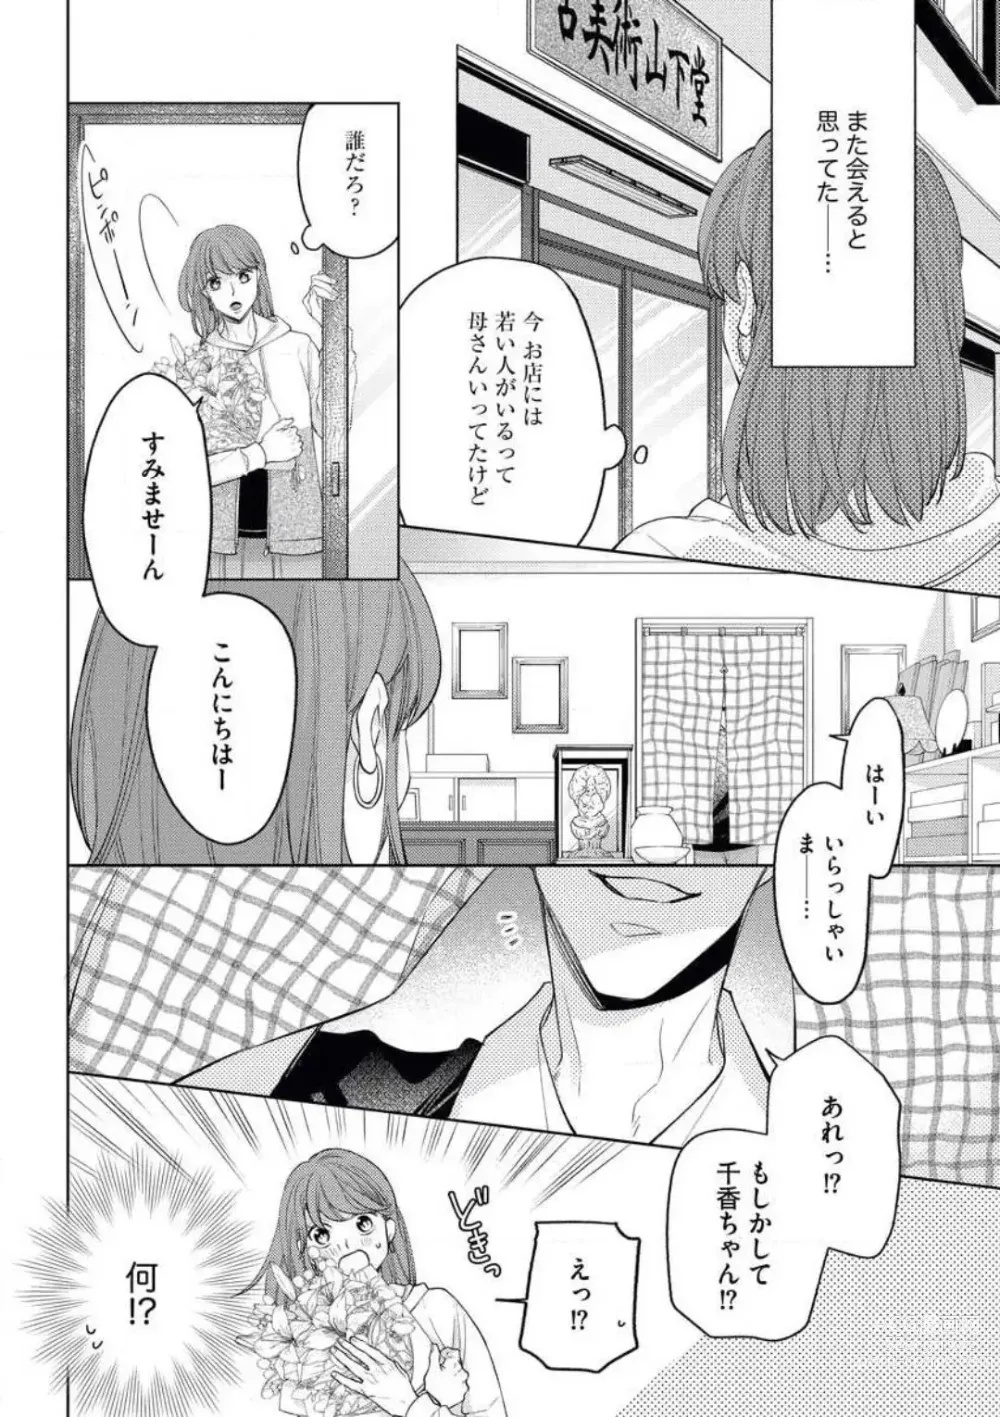 Page 5 of manga Sepia-iro no Koi ga Irozuku Toki